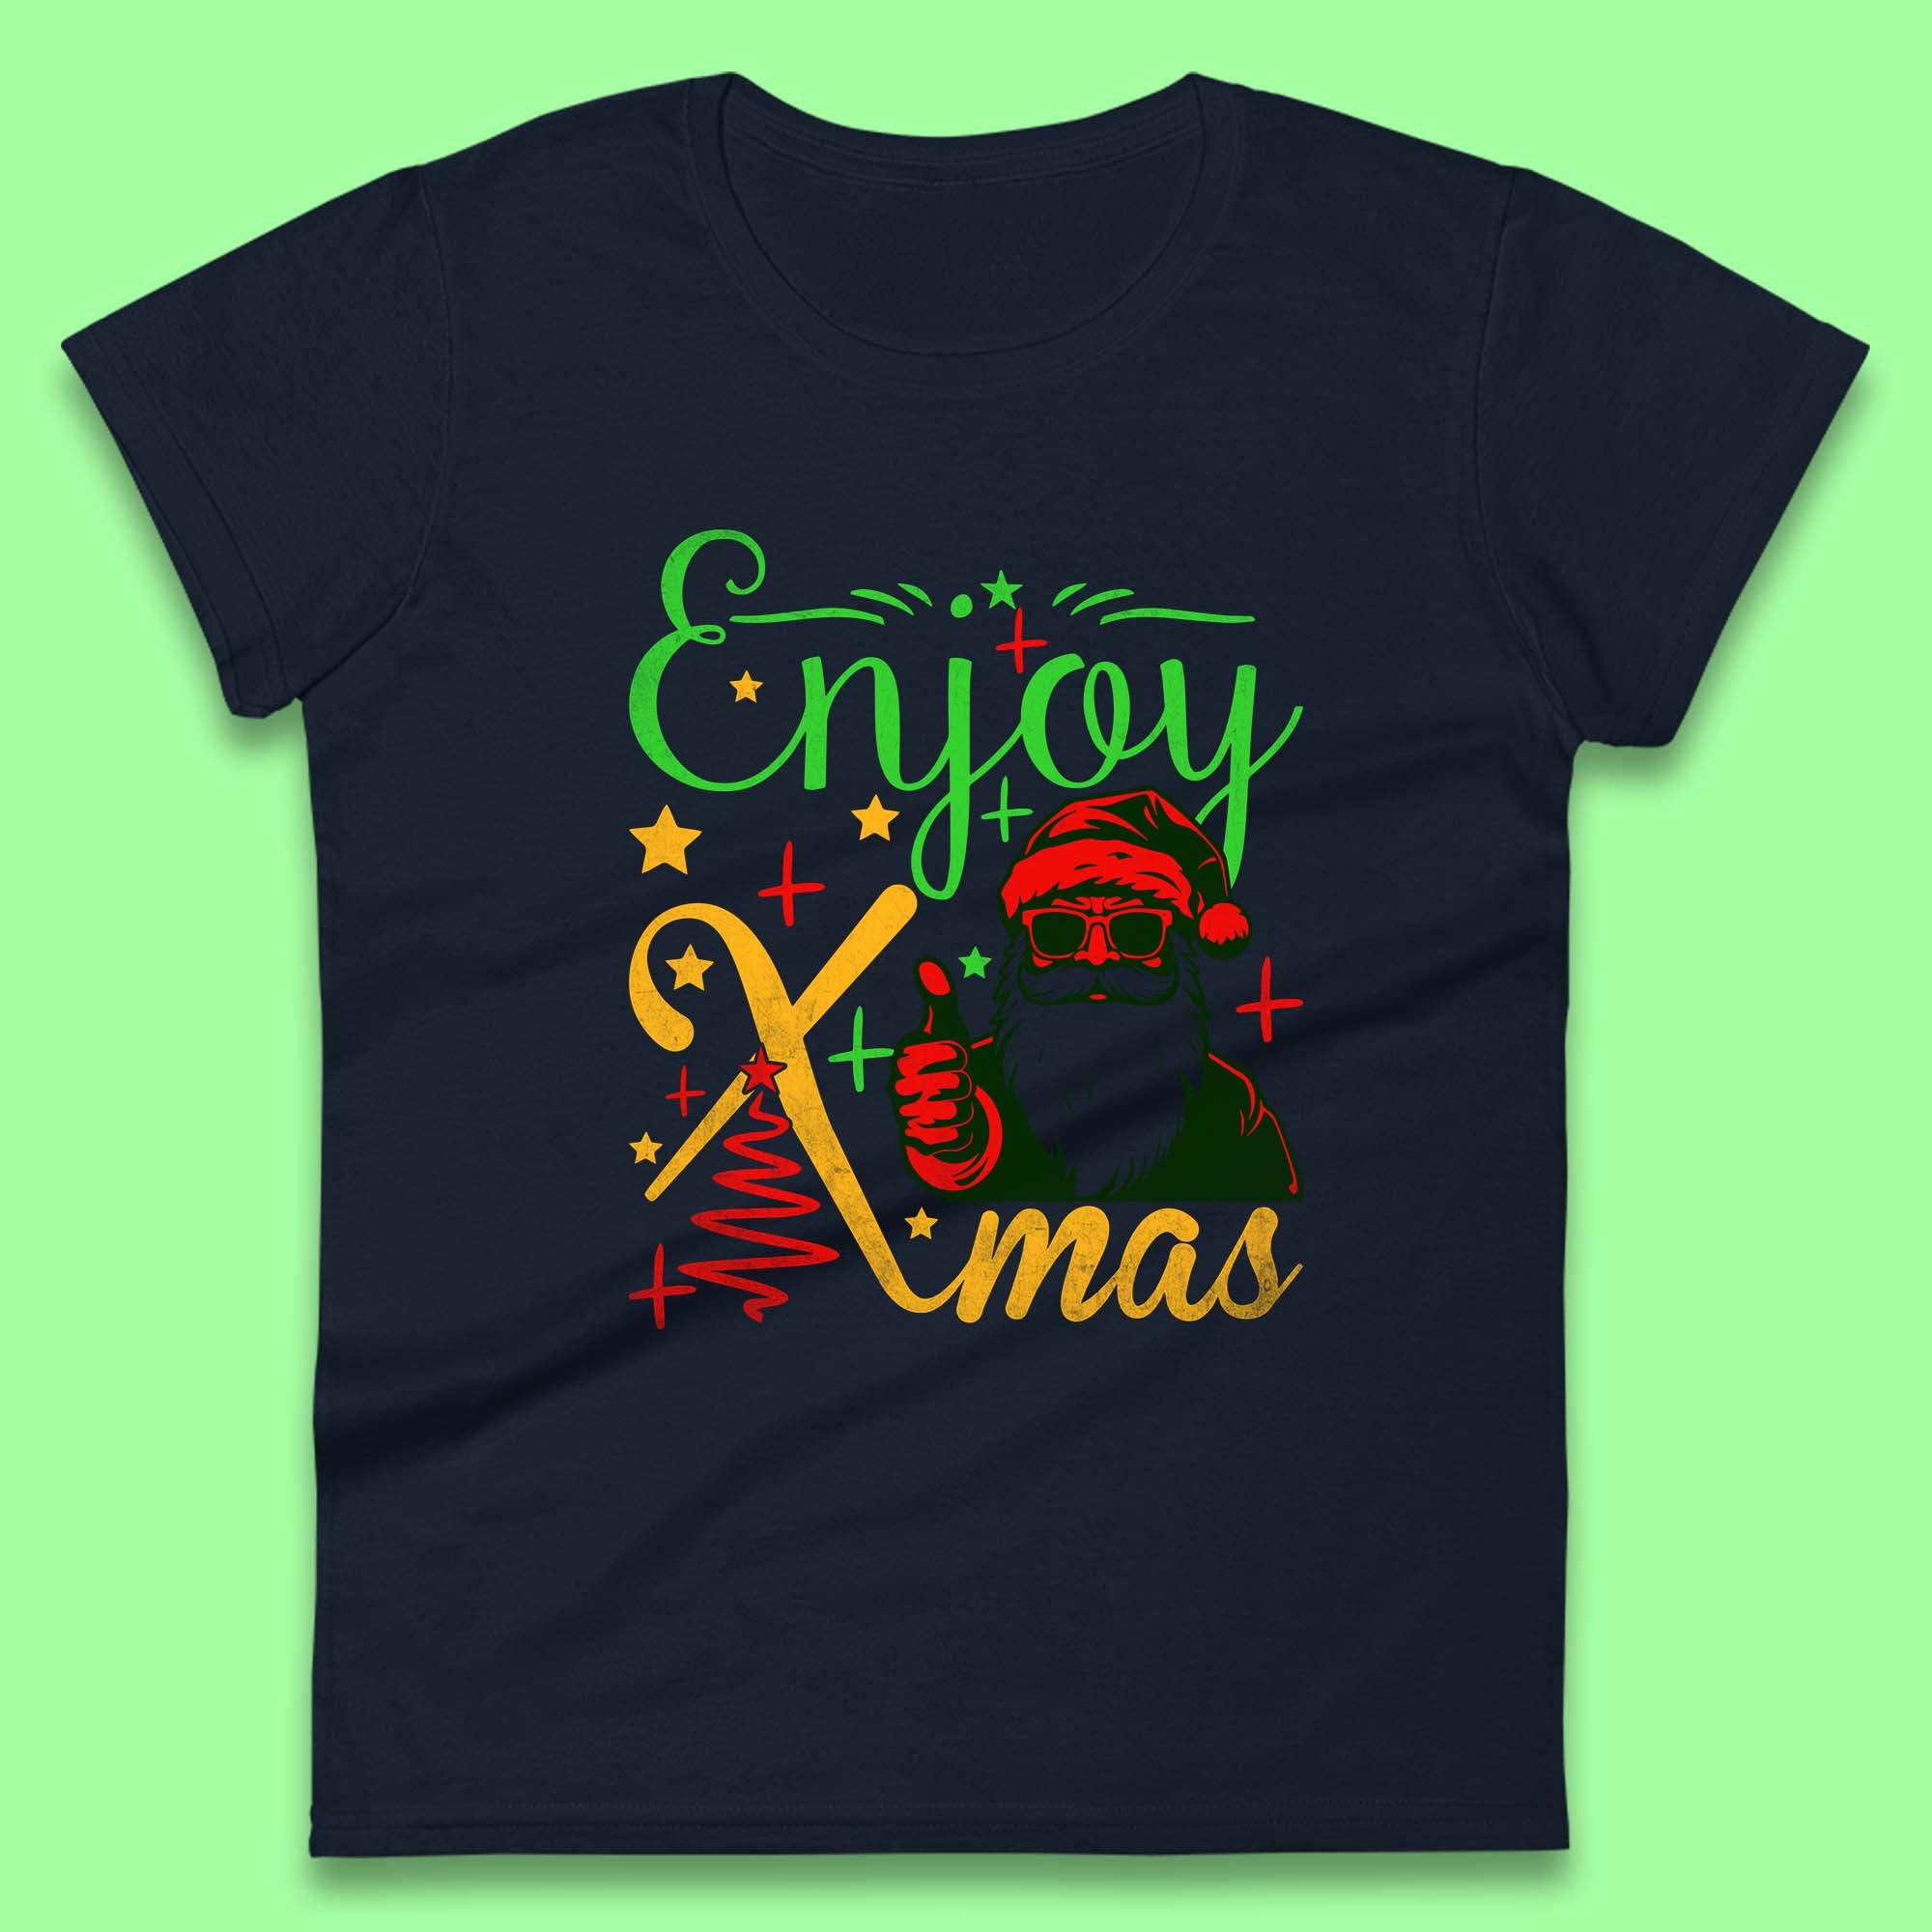 Enjoy Xmas Santa Claus Thumbs Up Merry Christmas Holiday Season Womens Tee Top